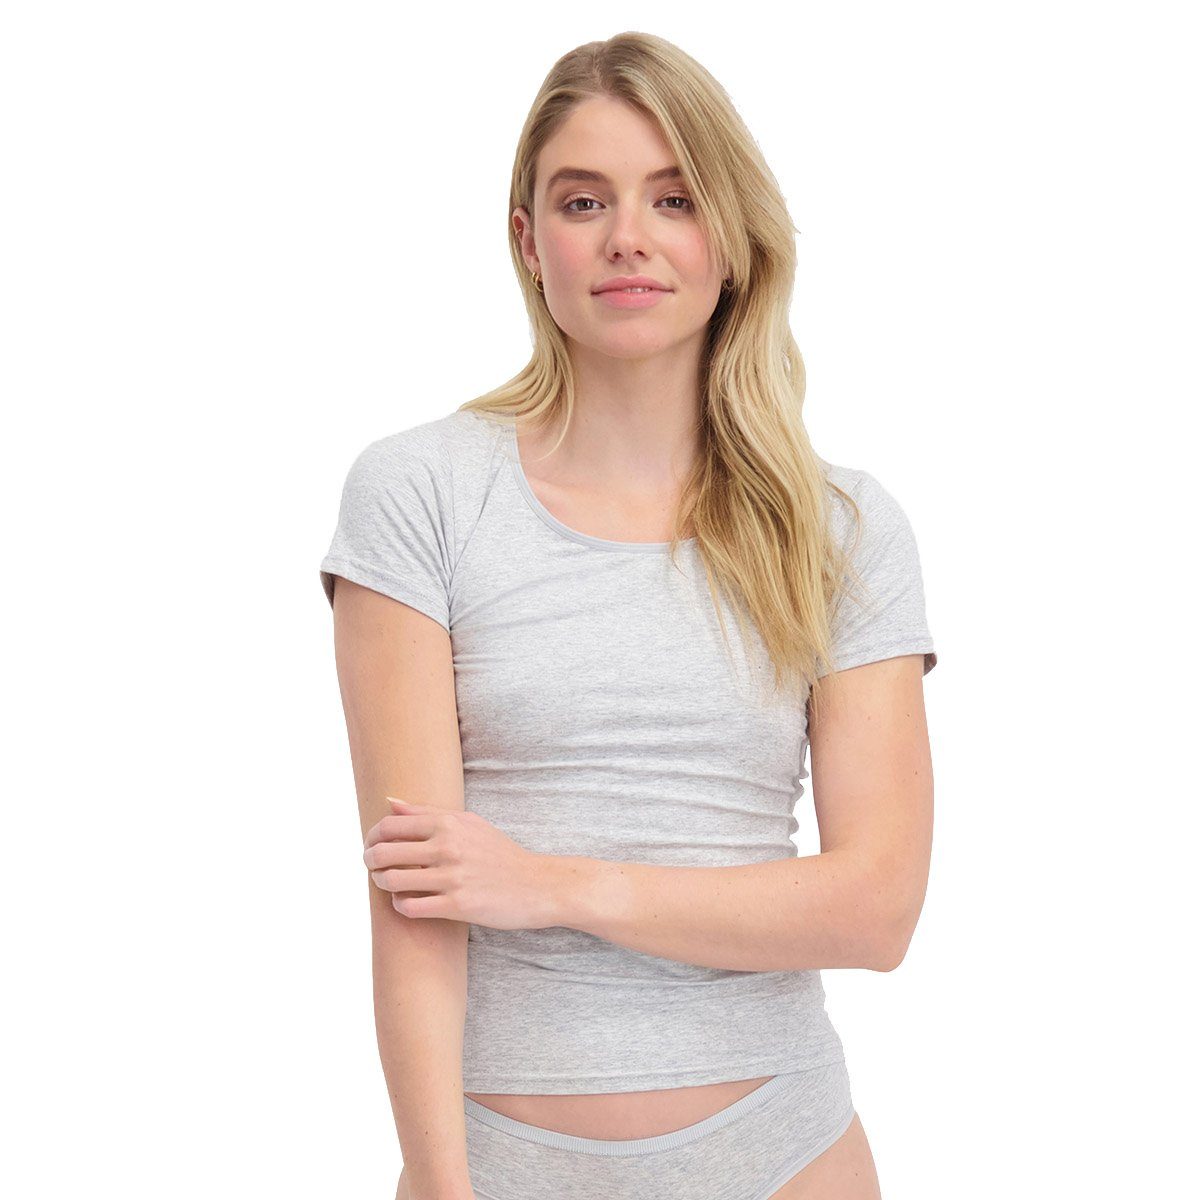 T-Shirt Grau basics Pack Bamboo 4er KATE, Unterhemd - Damen Unterhemd